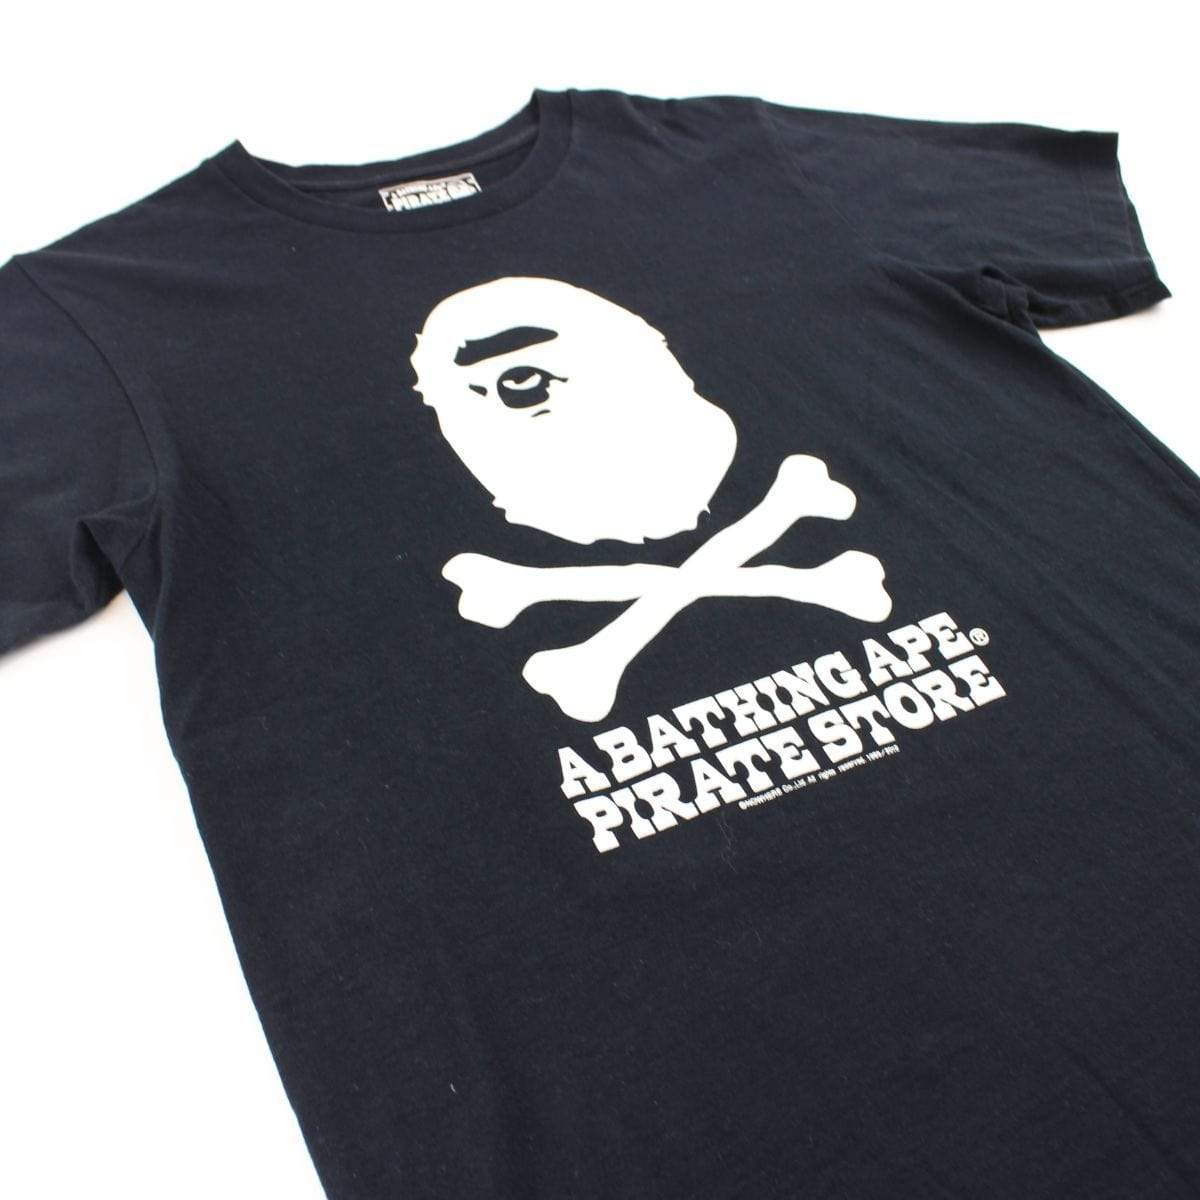 Bape White Big Ape Logo Pirate Store Crossbones Tee Black - SaruGeneral